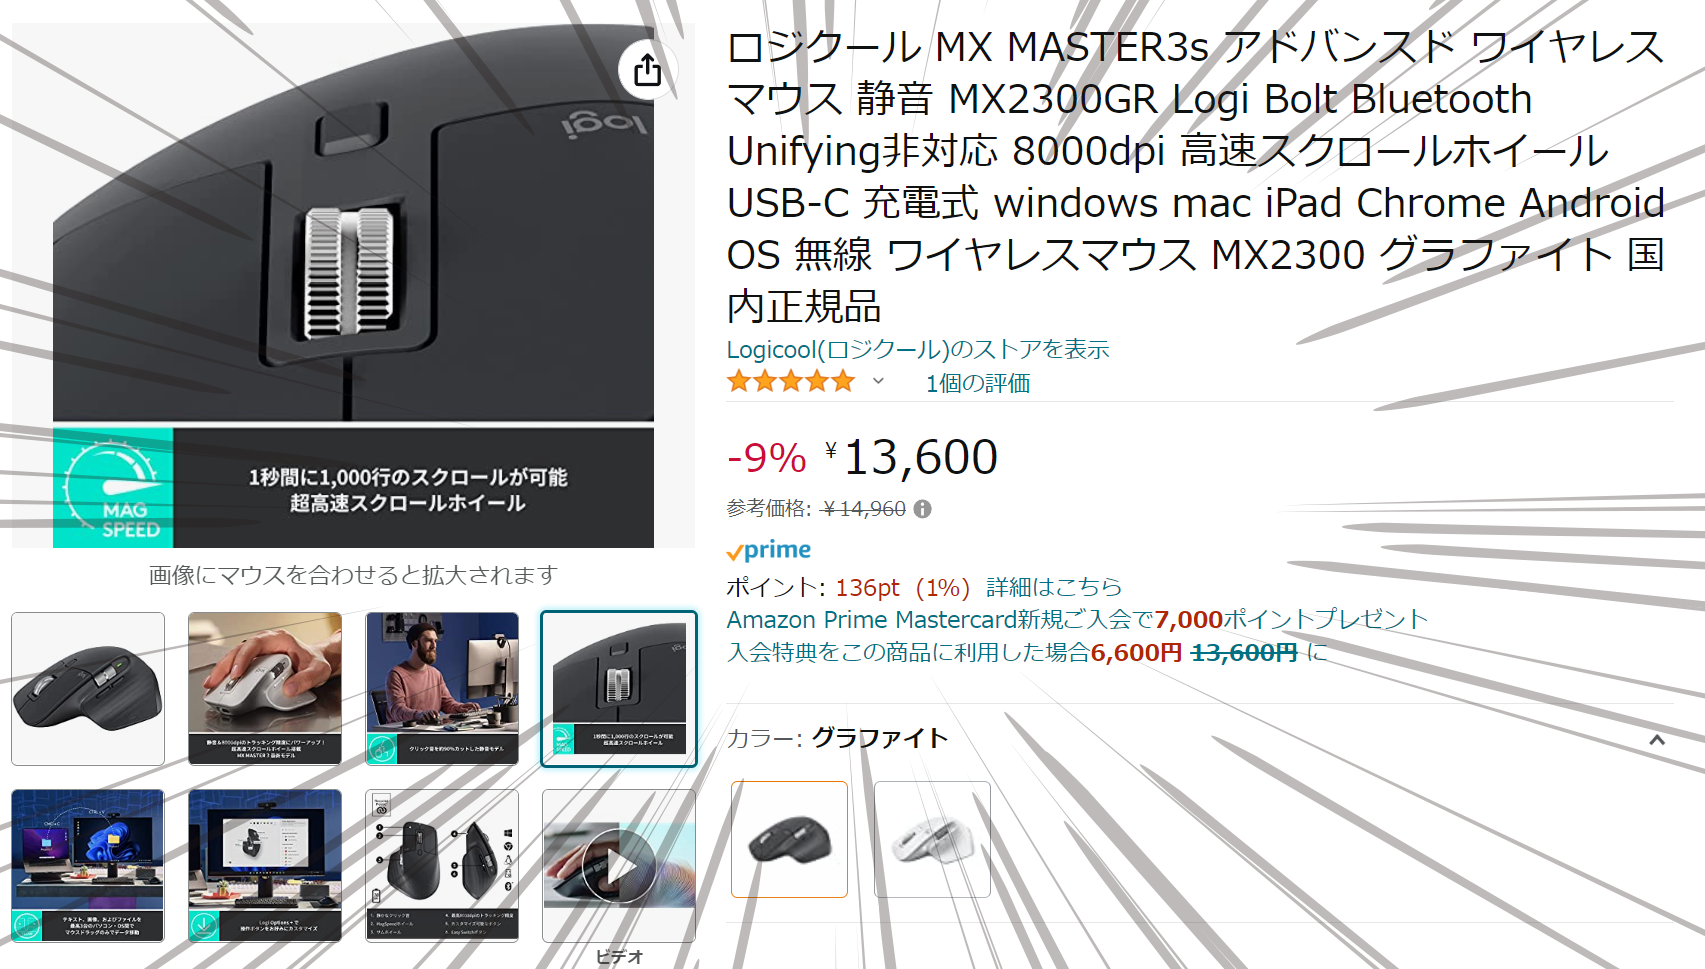 Logicool MX Master 3Sアマゾン安売り